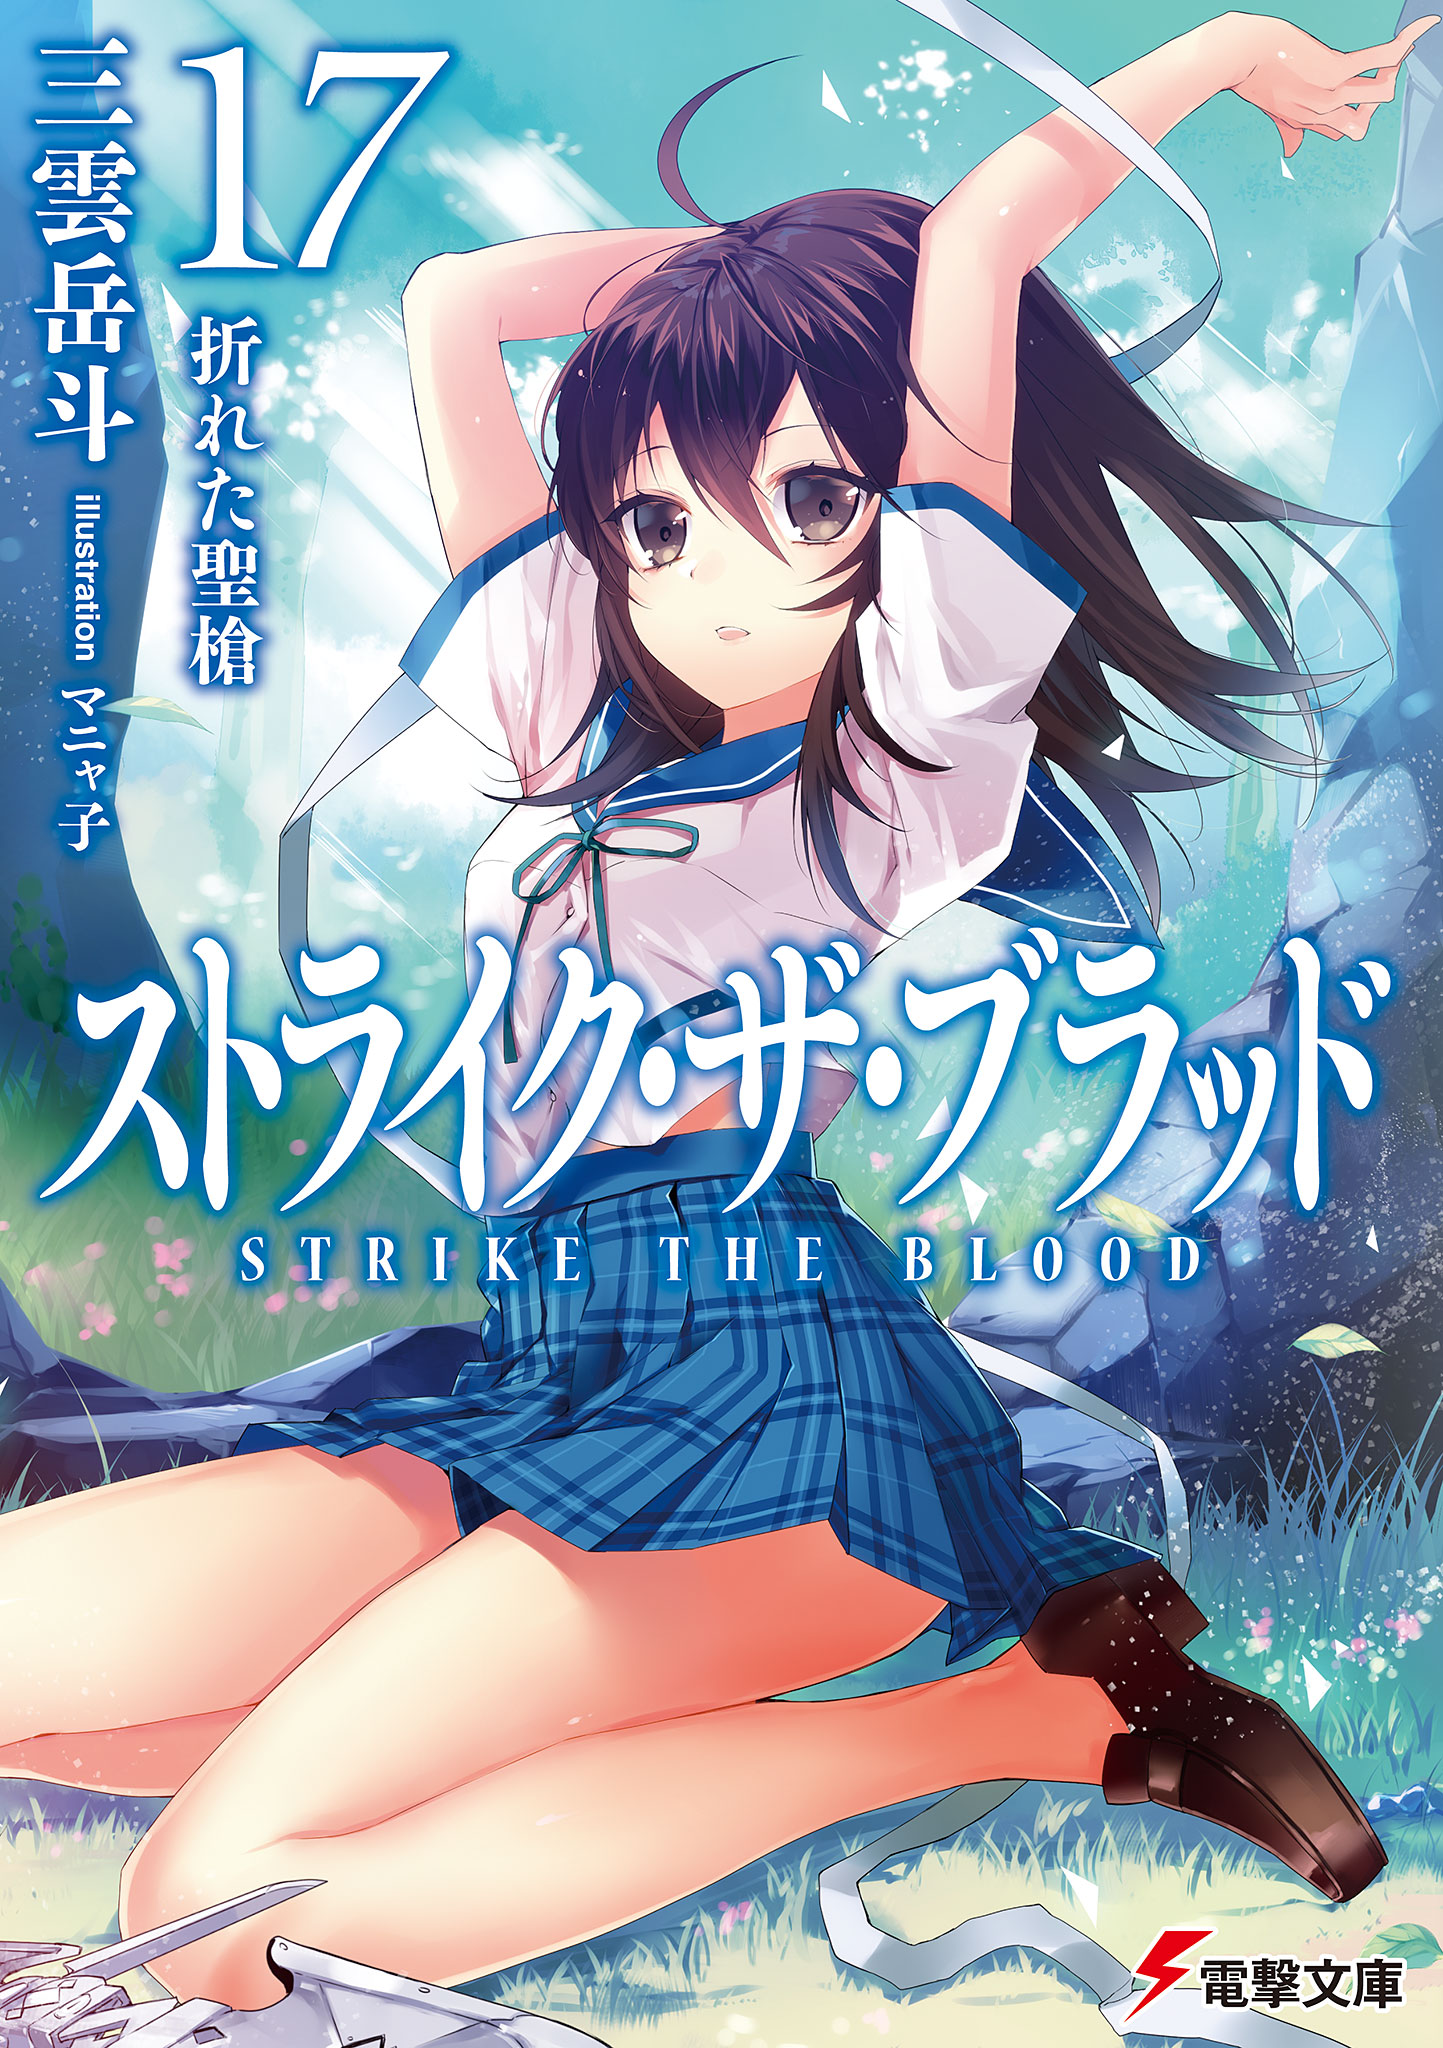 Strike the Blood, Vol. 14 (light novel): by Mikumo, Gakuto